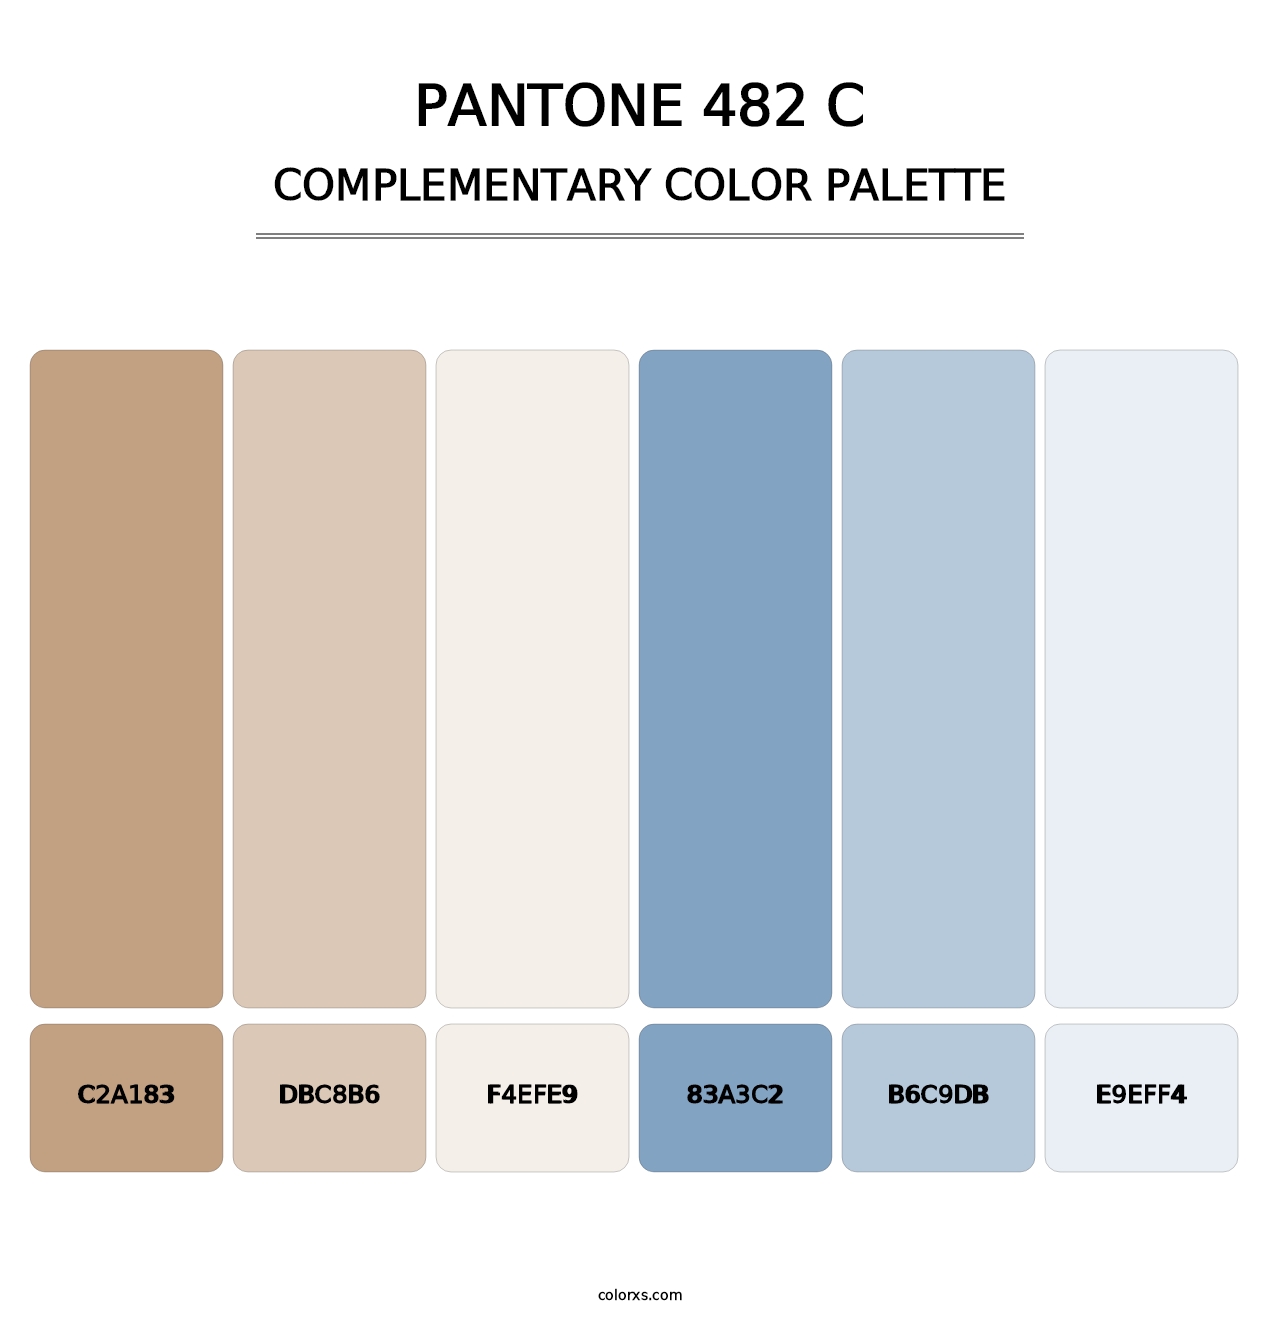 PANTONE 482 C - Complementary Color Palette